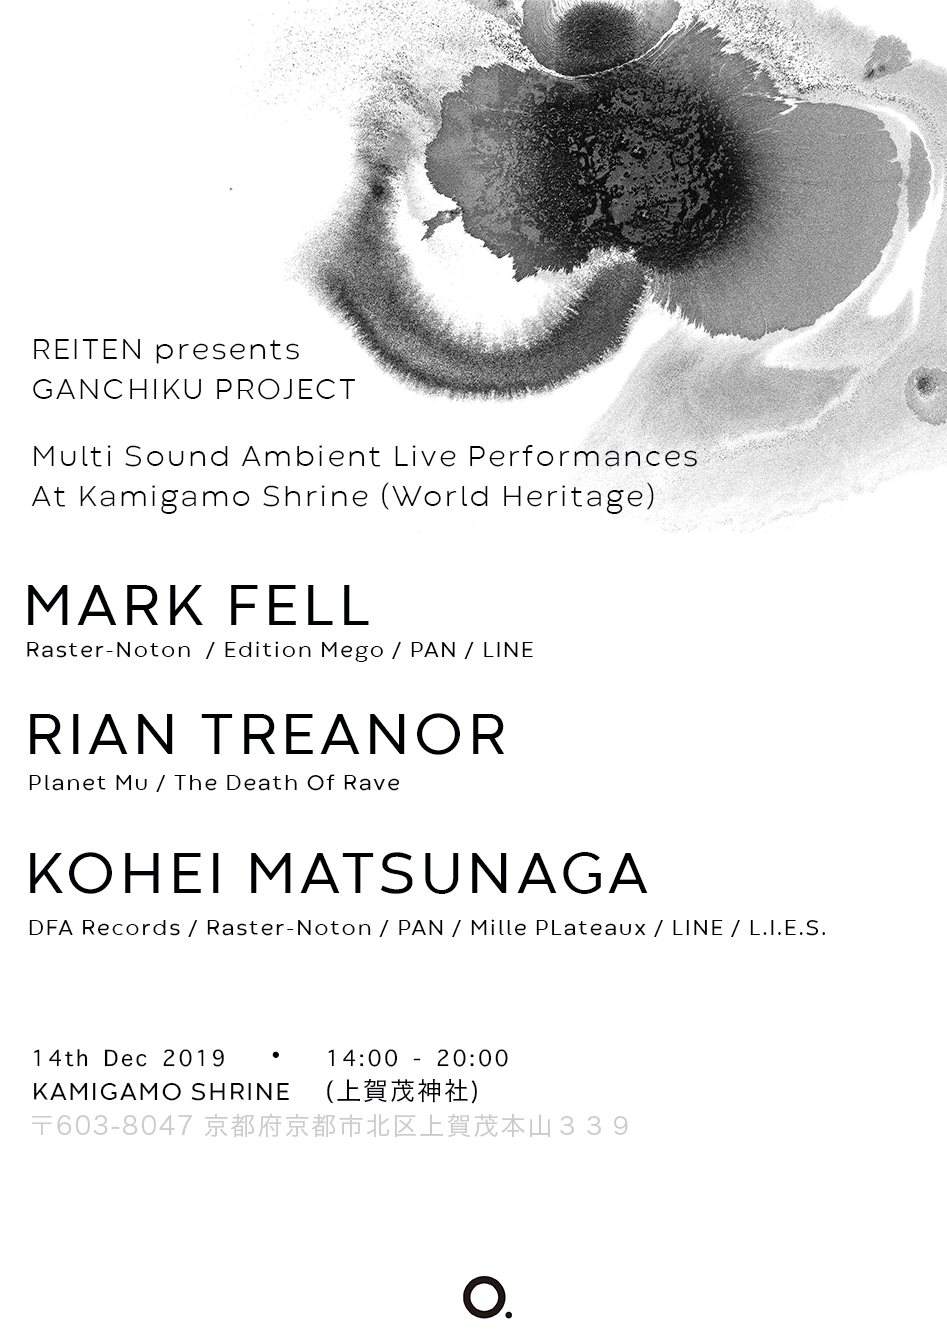 REITEN presents Ganchiku Project at Kamigamo Shrine // Multi Sound Ambient Live Performances - フライヤー表